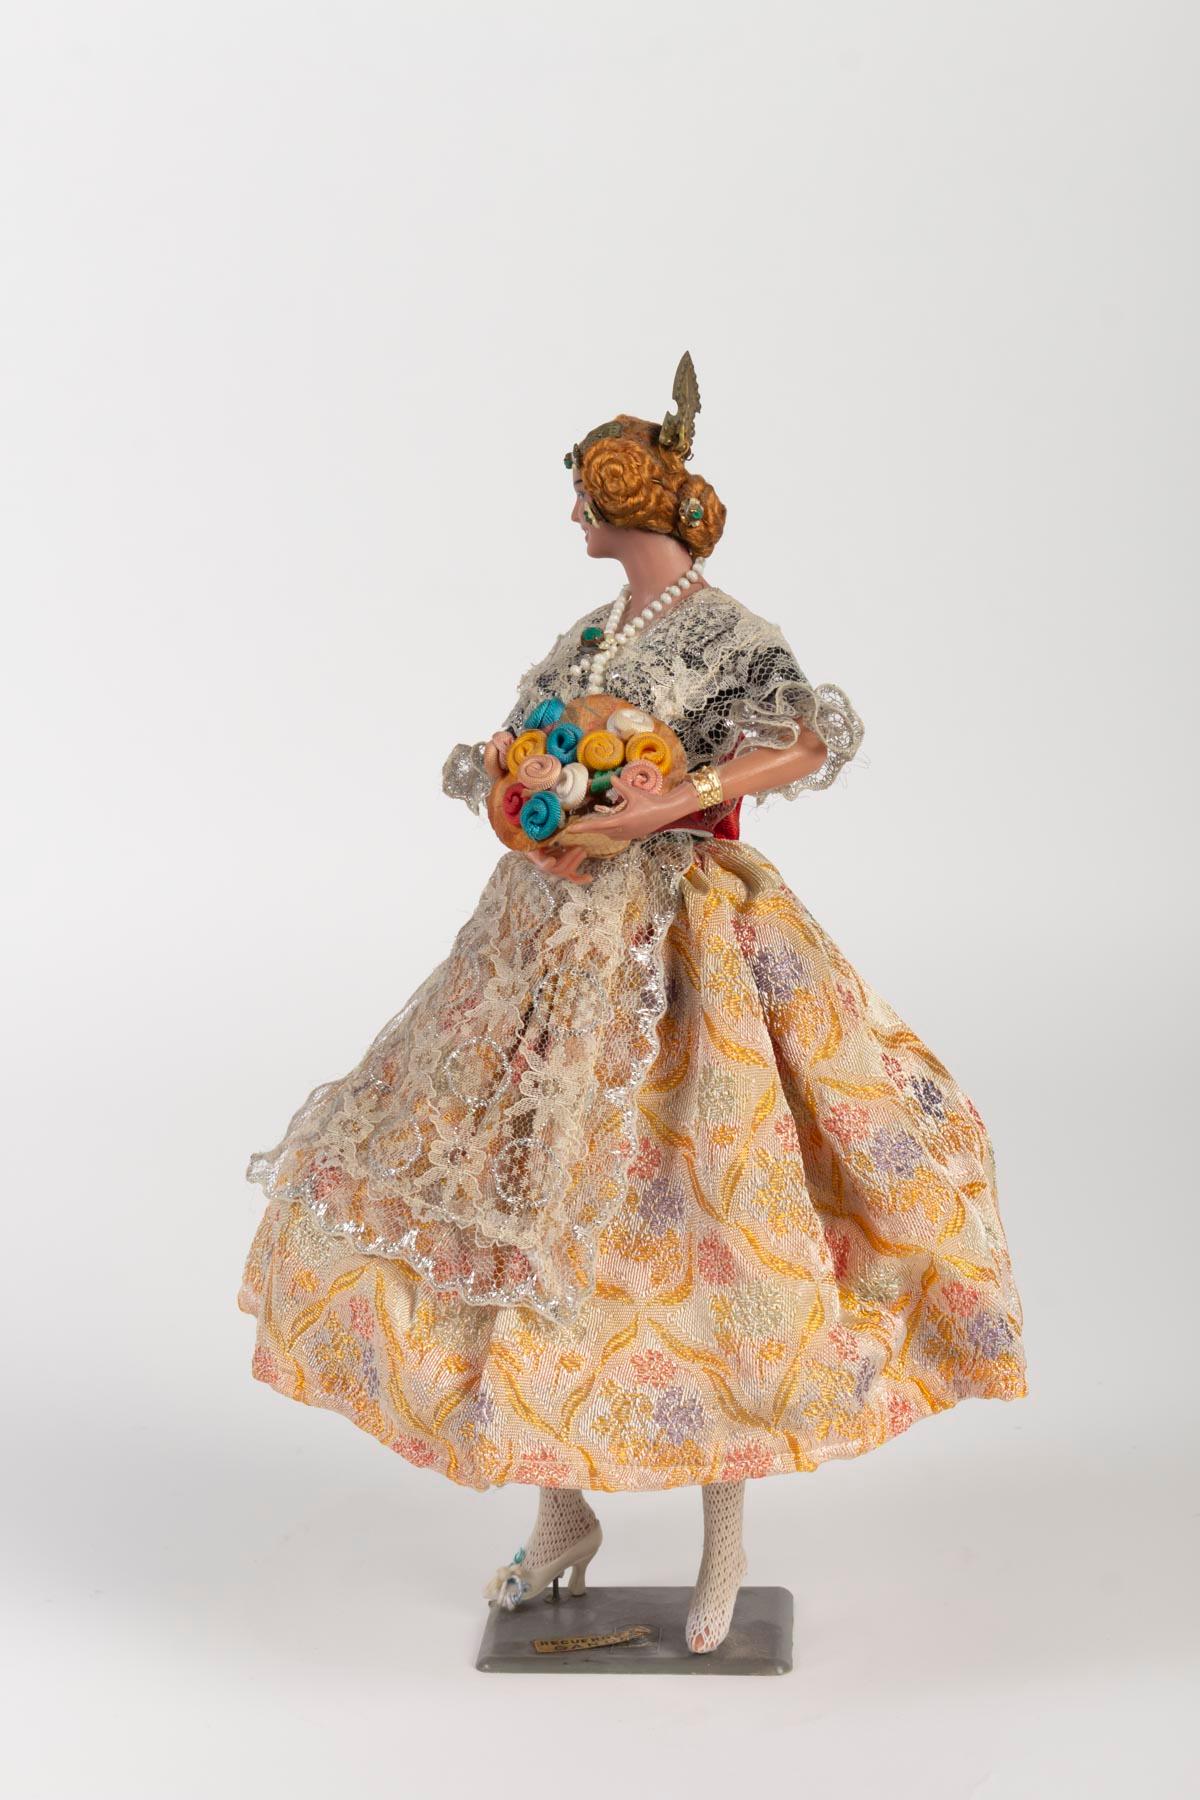 Dancer, Doll, 1950, Spanish
Measures: H 33cm, L 23cm, P 17cm.